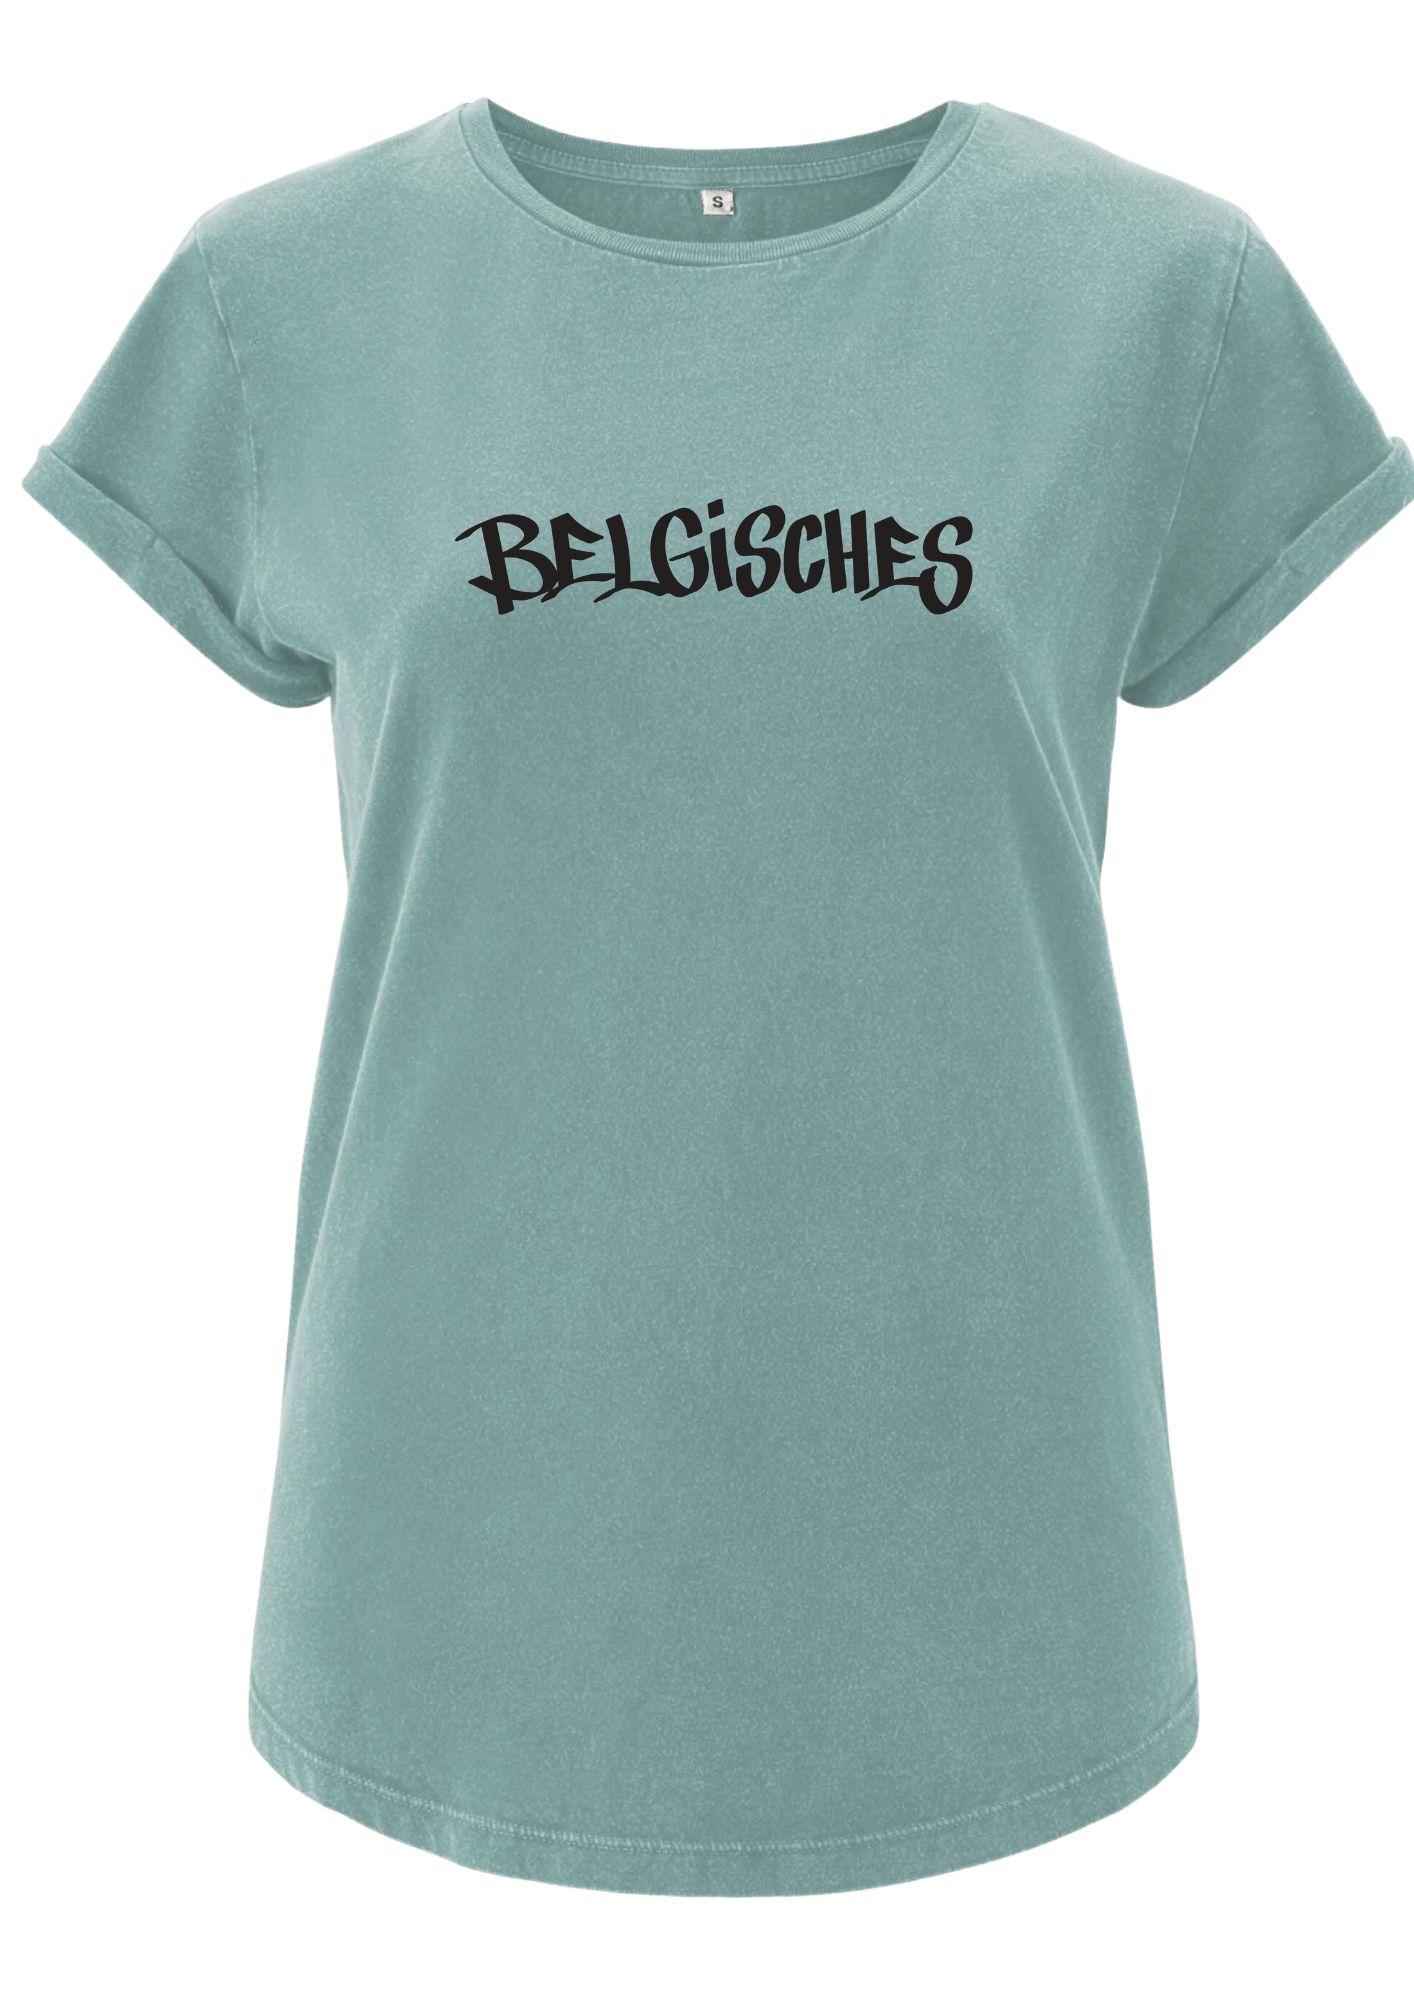 Köln Belgisches Tag T Shirt Frauen Grün